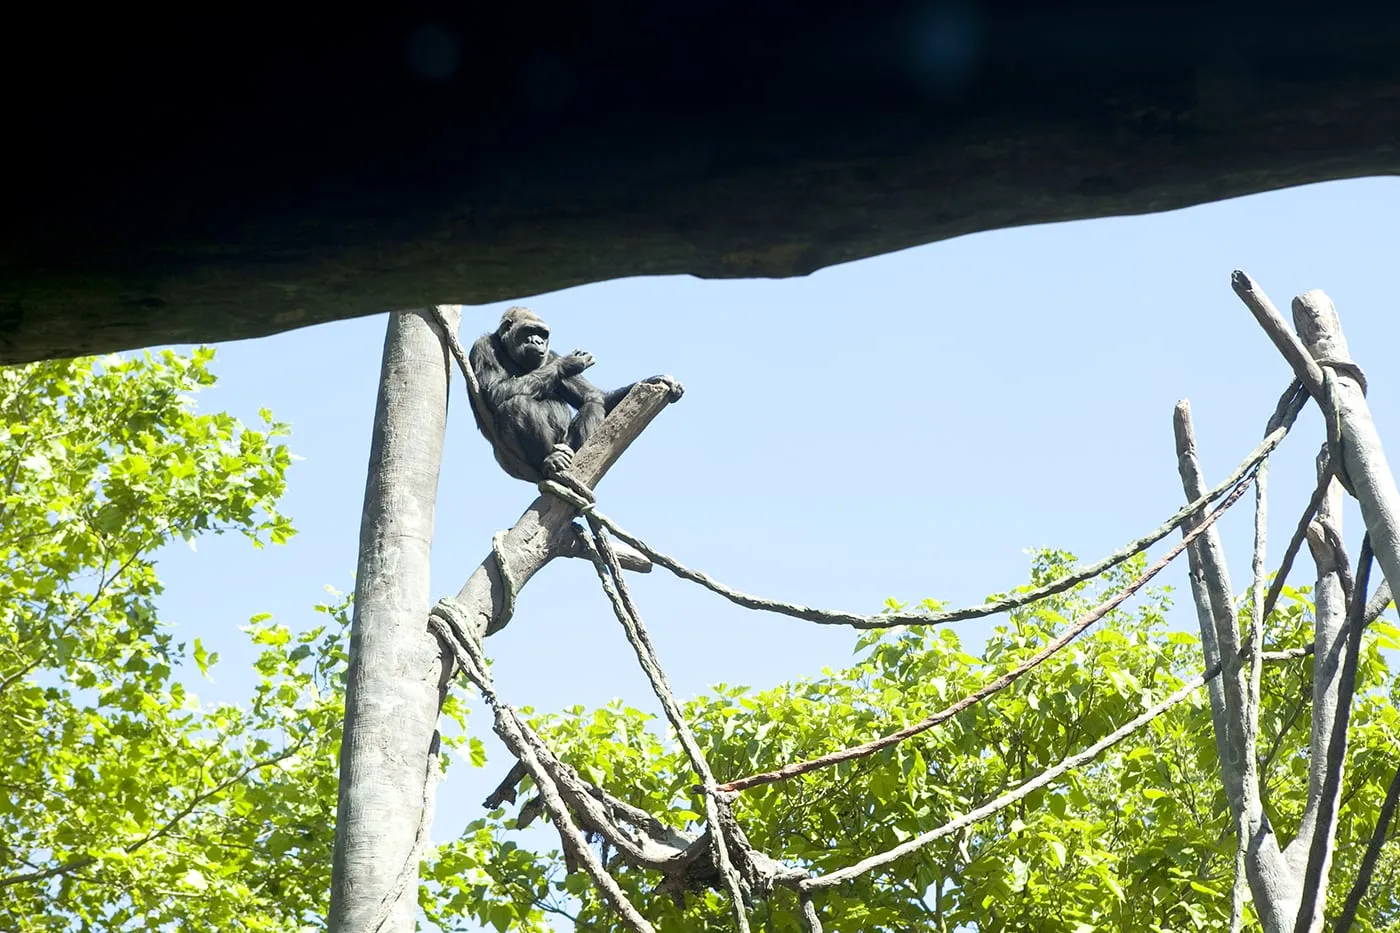 Gorillas at Woodland Park Zoo in Seattle, Washington.